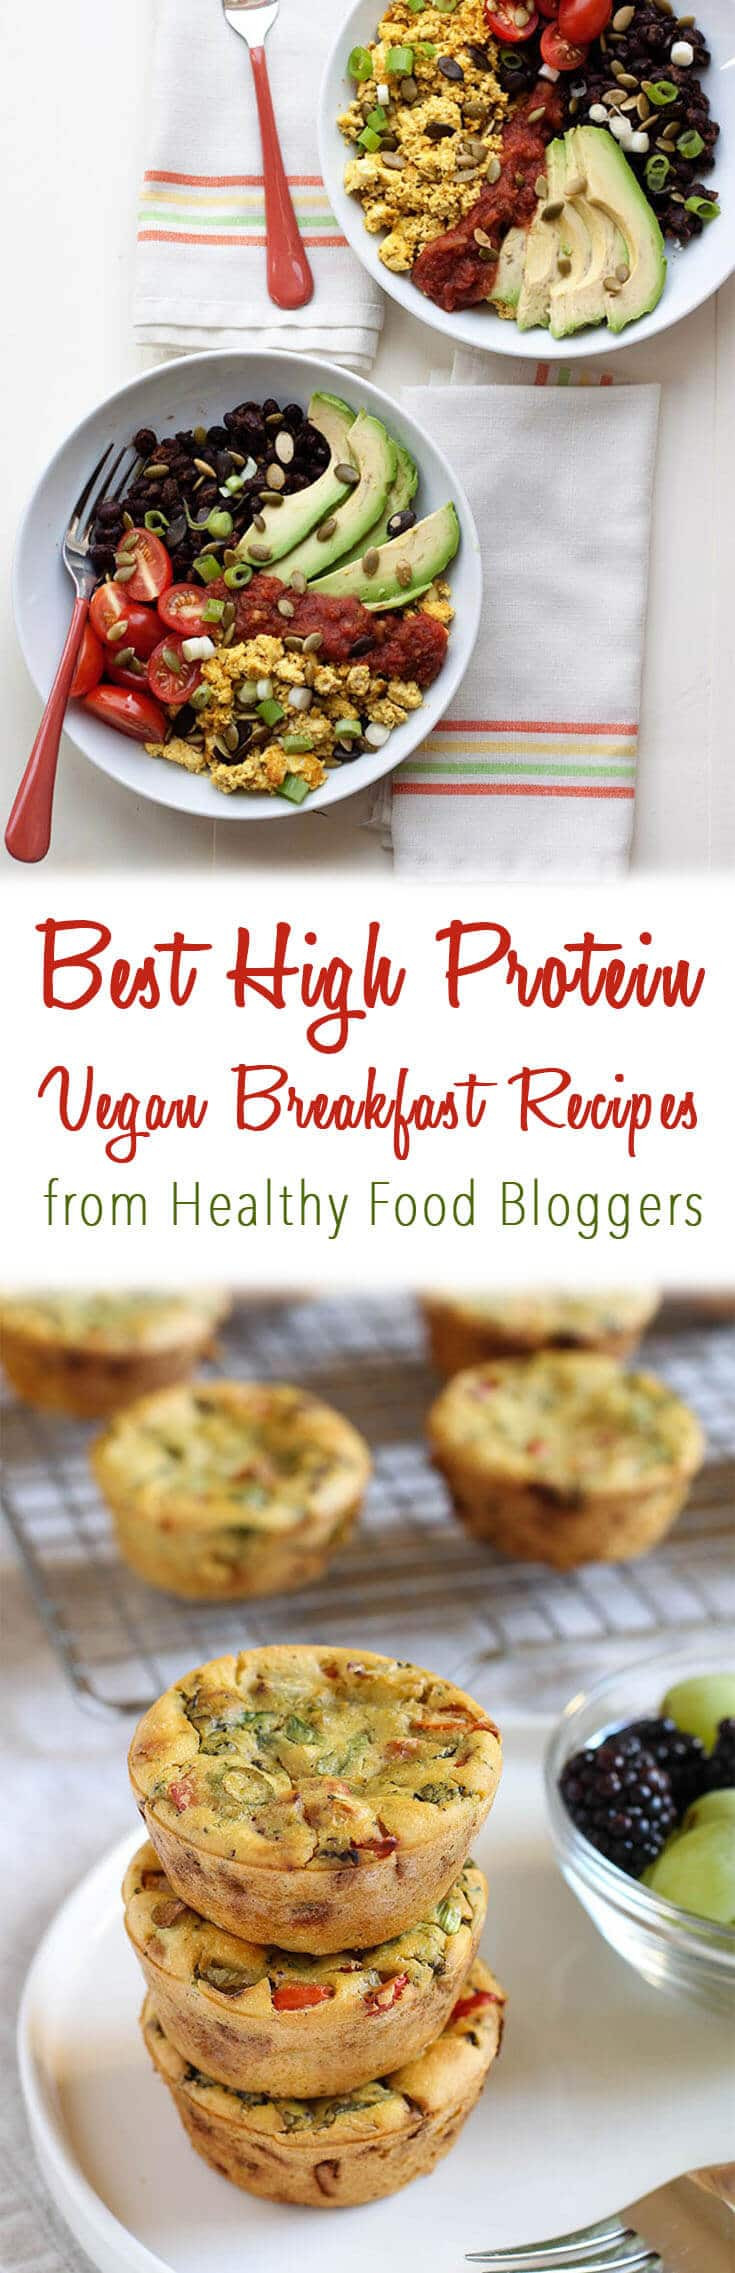 Vegan Breakfast Ideas Plant Based
 Best High Protein Vegan Breakfast Recipes from Healthy